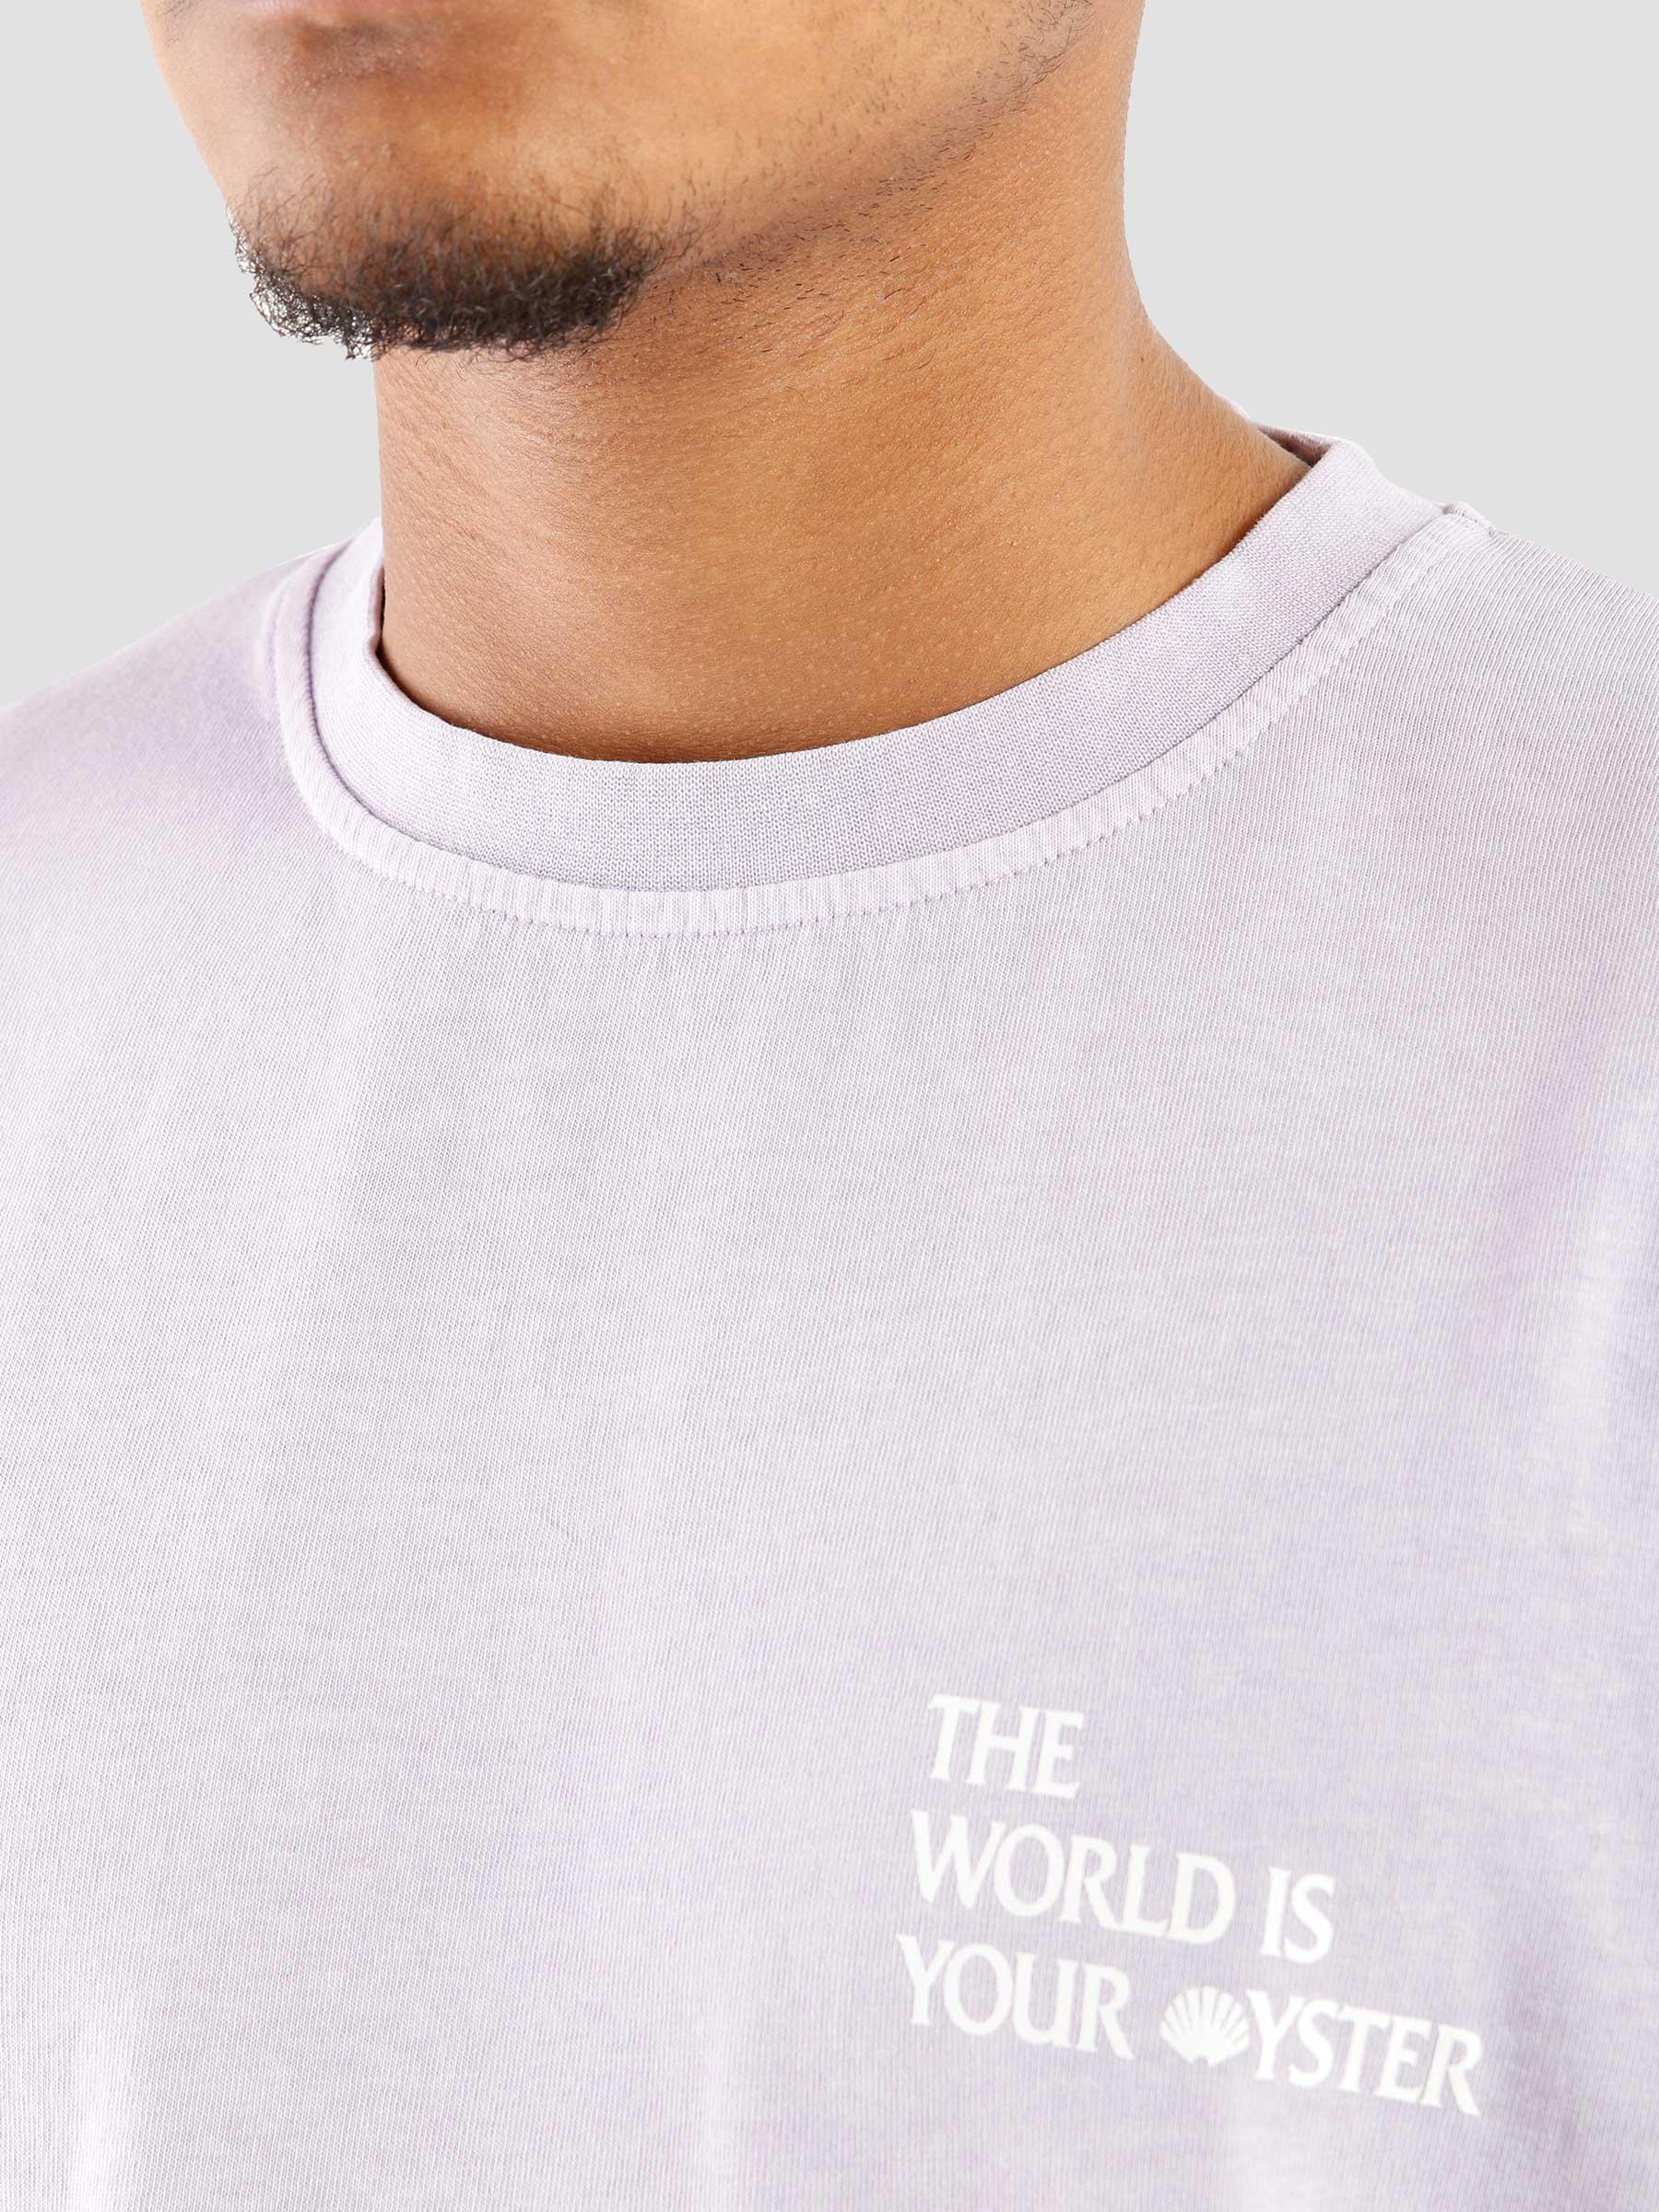 Phenomenal Camiseta Lois VUITTON-Serigrafía Fenomenal digital-distro  Lisa-Poliester De Algodón Suave